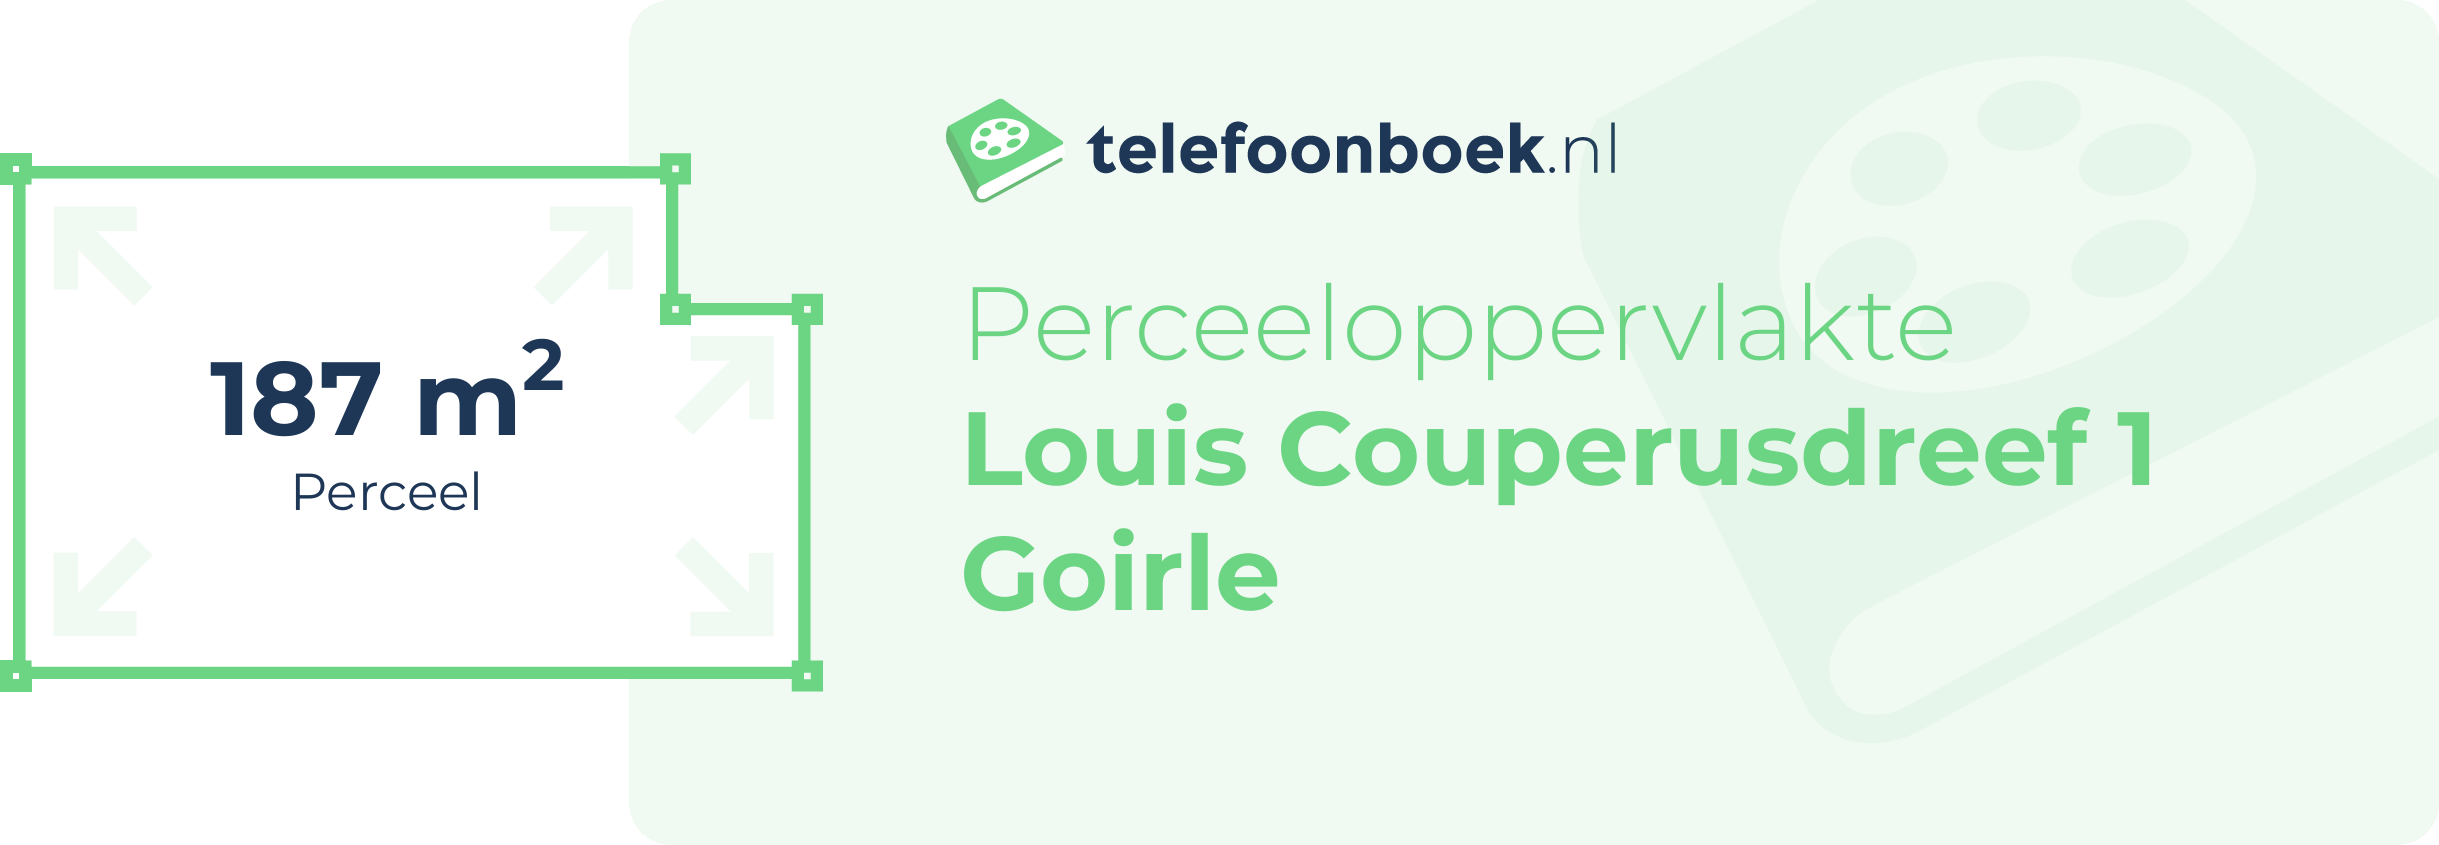 Perceeloppervlakte Louis Couperusdreef 1 Goirle